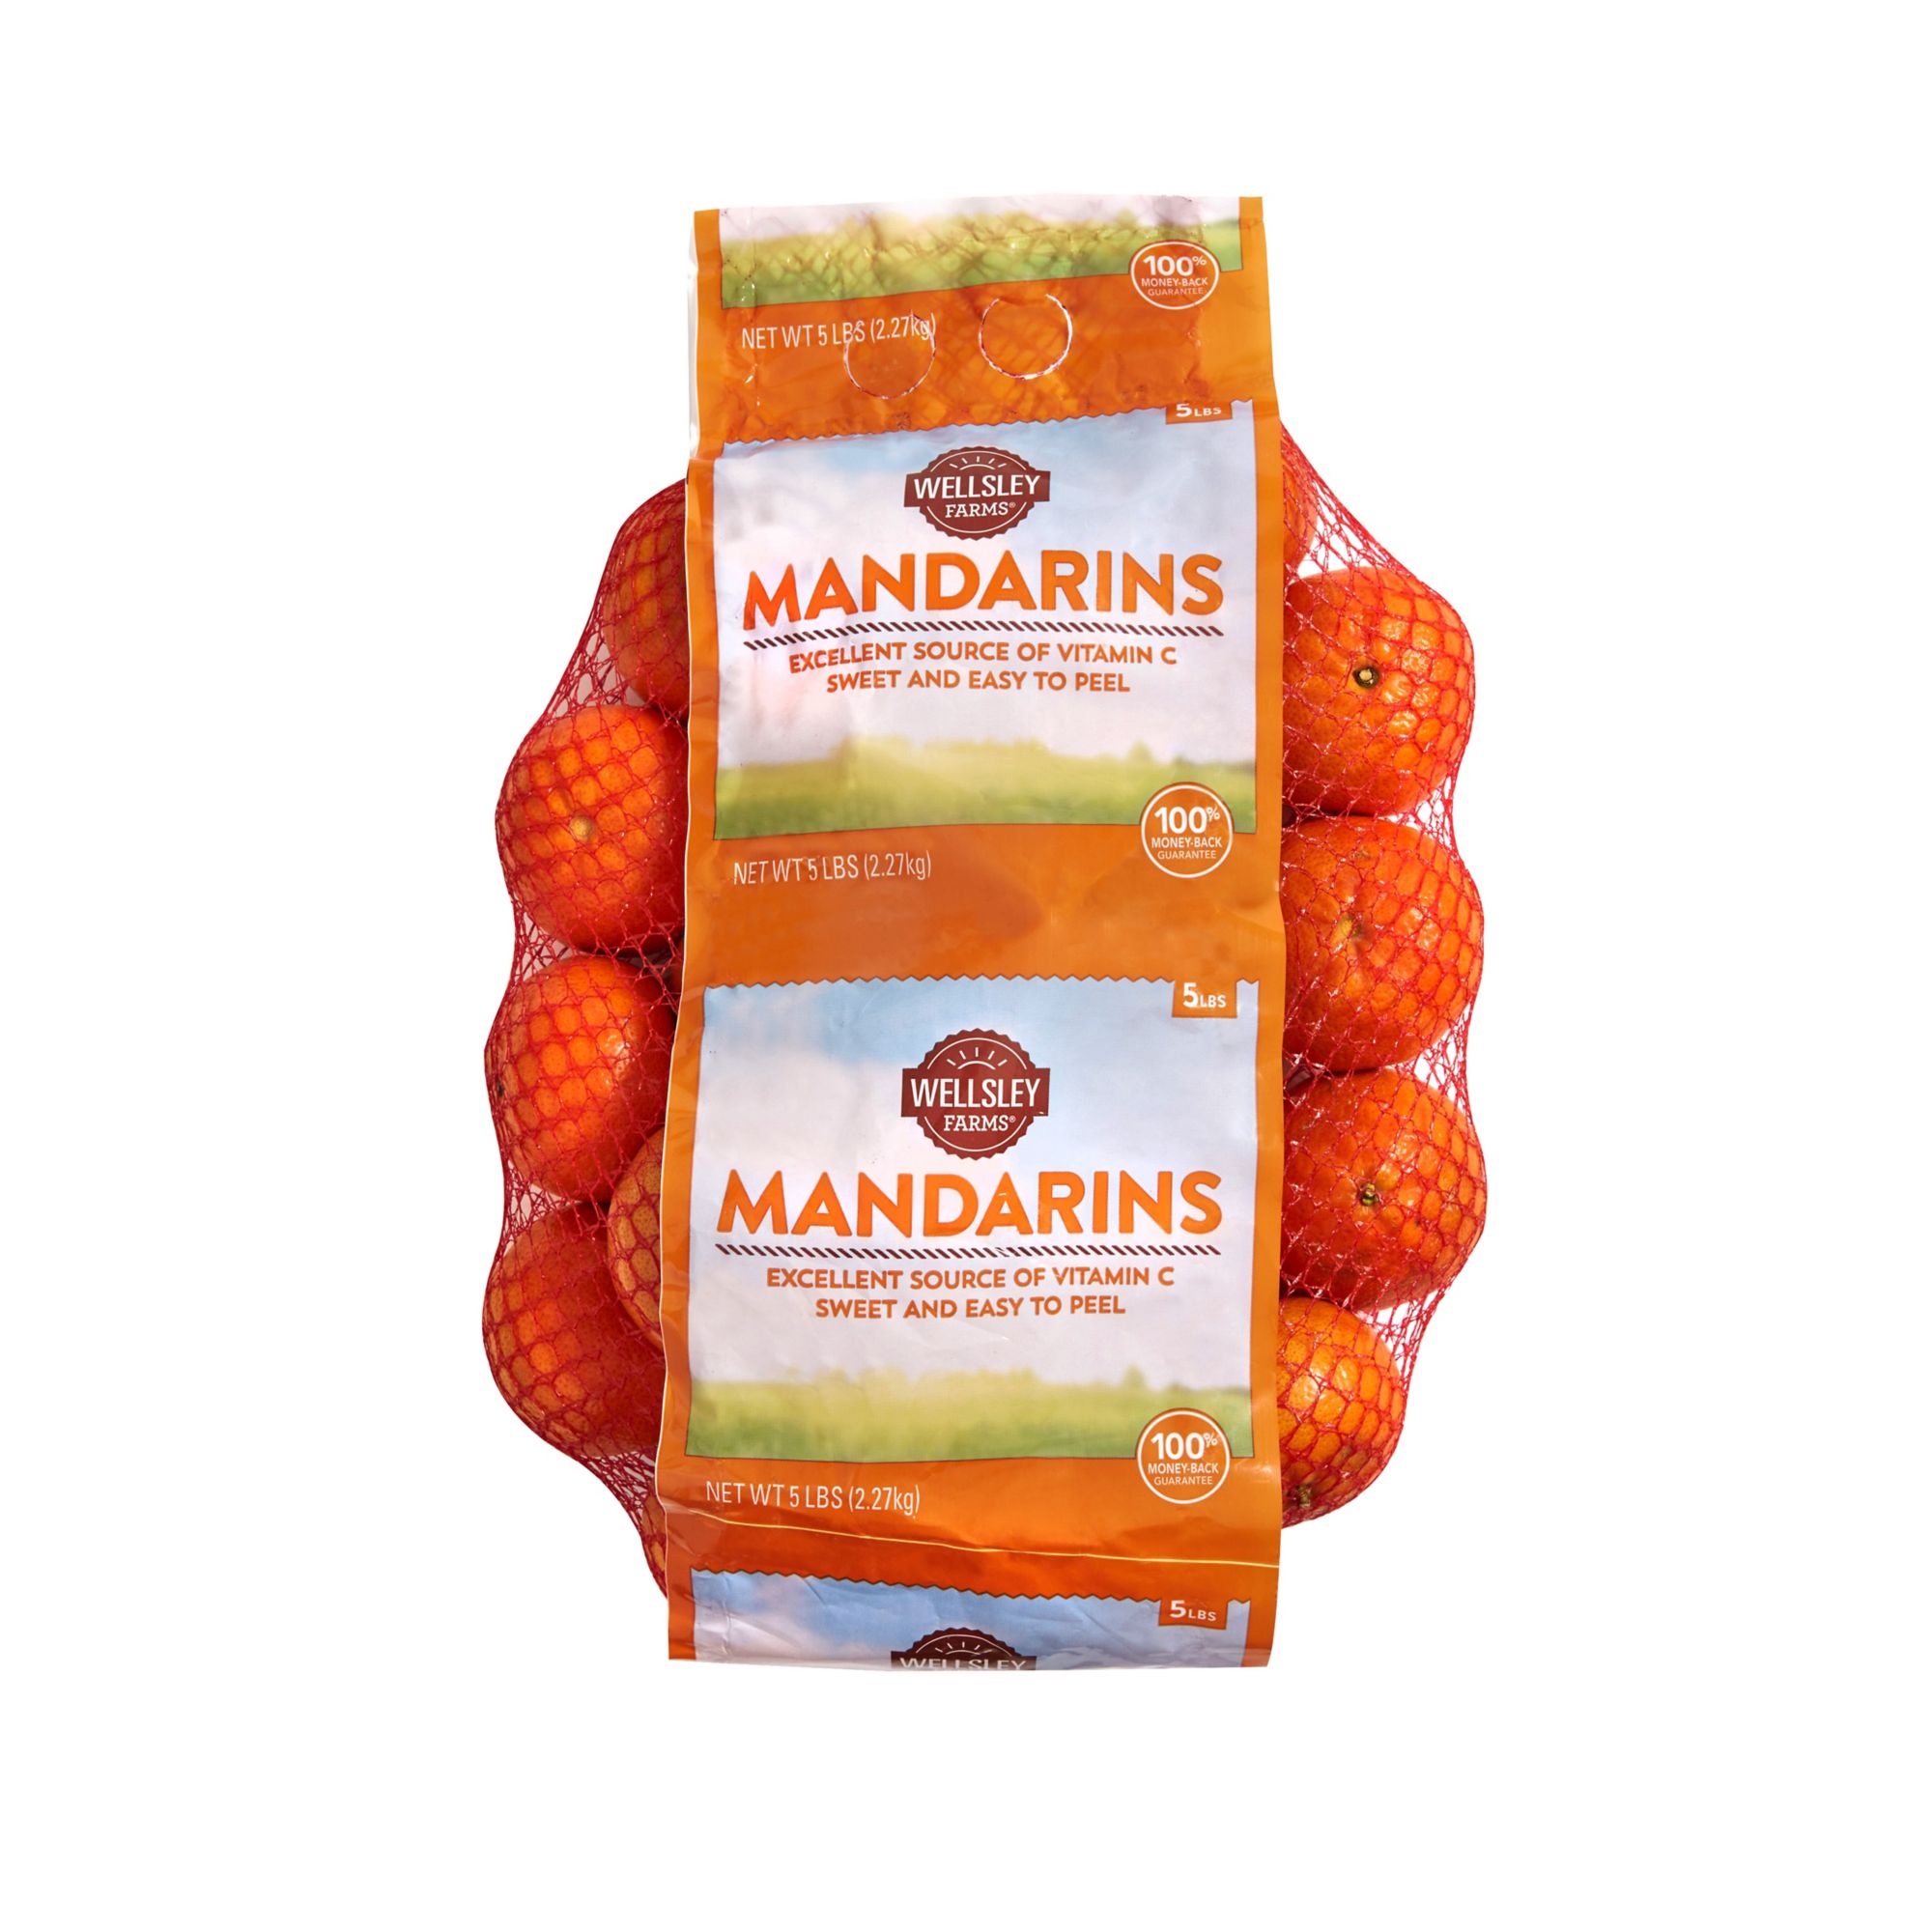 Wellsley Farms Mandarins, 5 lbs.